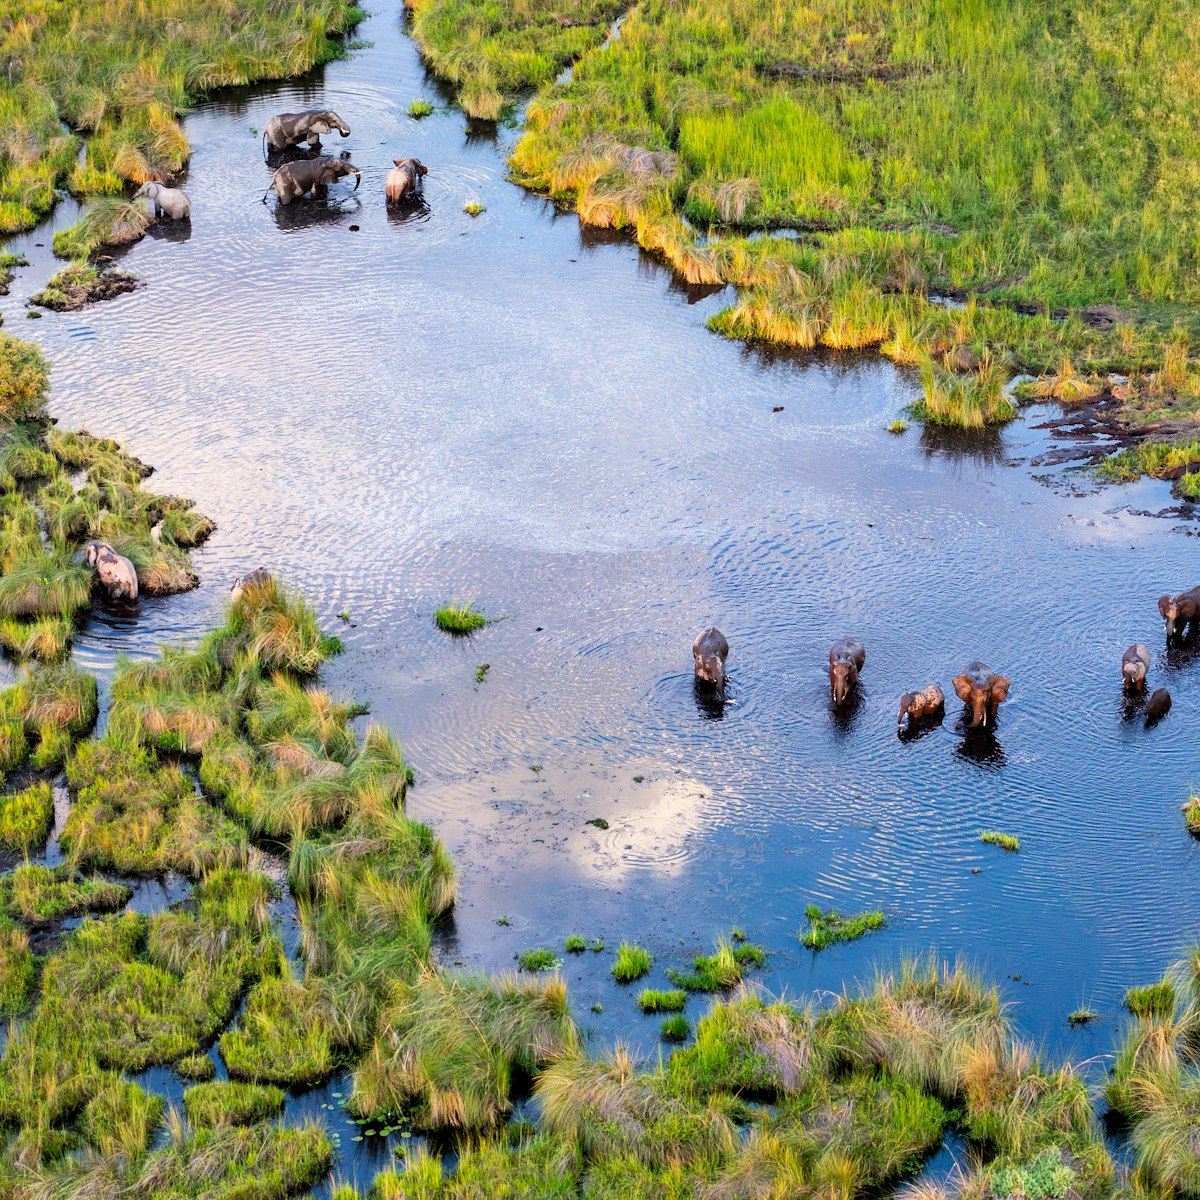 Aerial view to bush of delta Okavango with elephant.
1502595308
adventure, aerial, africa, african, animal, beautiful, botswana, bush, colour, dangerous, delta, elephant, endorheic basin, environment, five, flight, forest, game, grassland, helicopter, jungle, kenya, landscape, loxodonta africana, mammal, moremi, national, nature, okavango, over, park, photography, plane, relax, reserve, safari, seven natural wonders of africa, swampy, tanzania, tourism, touristic, travel destination, tree, trip, view, water, wild, wildlife